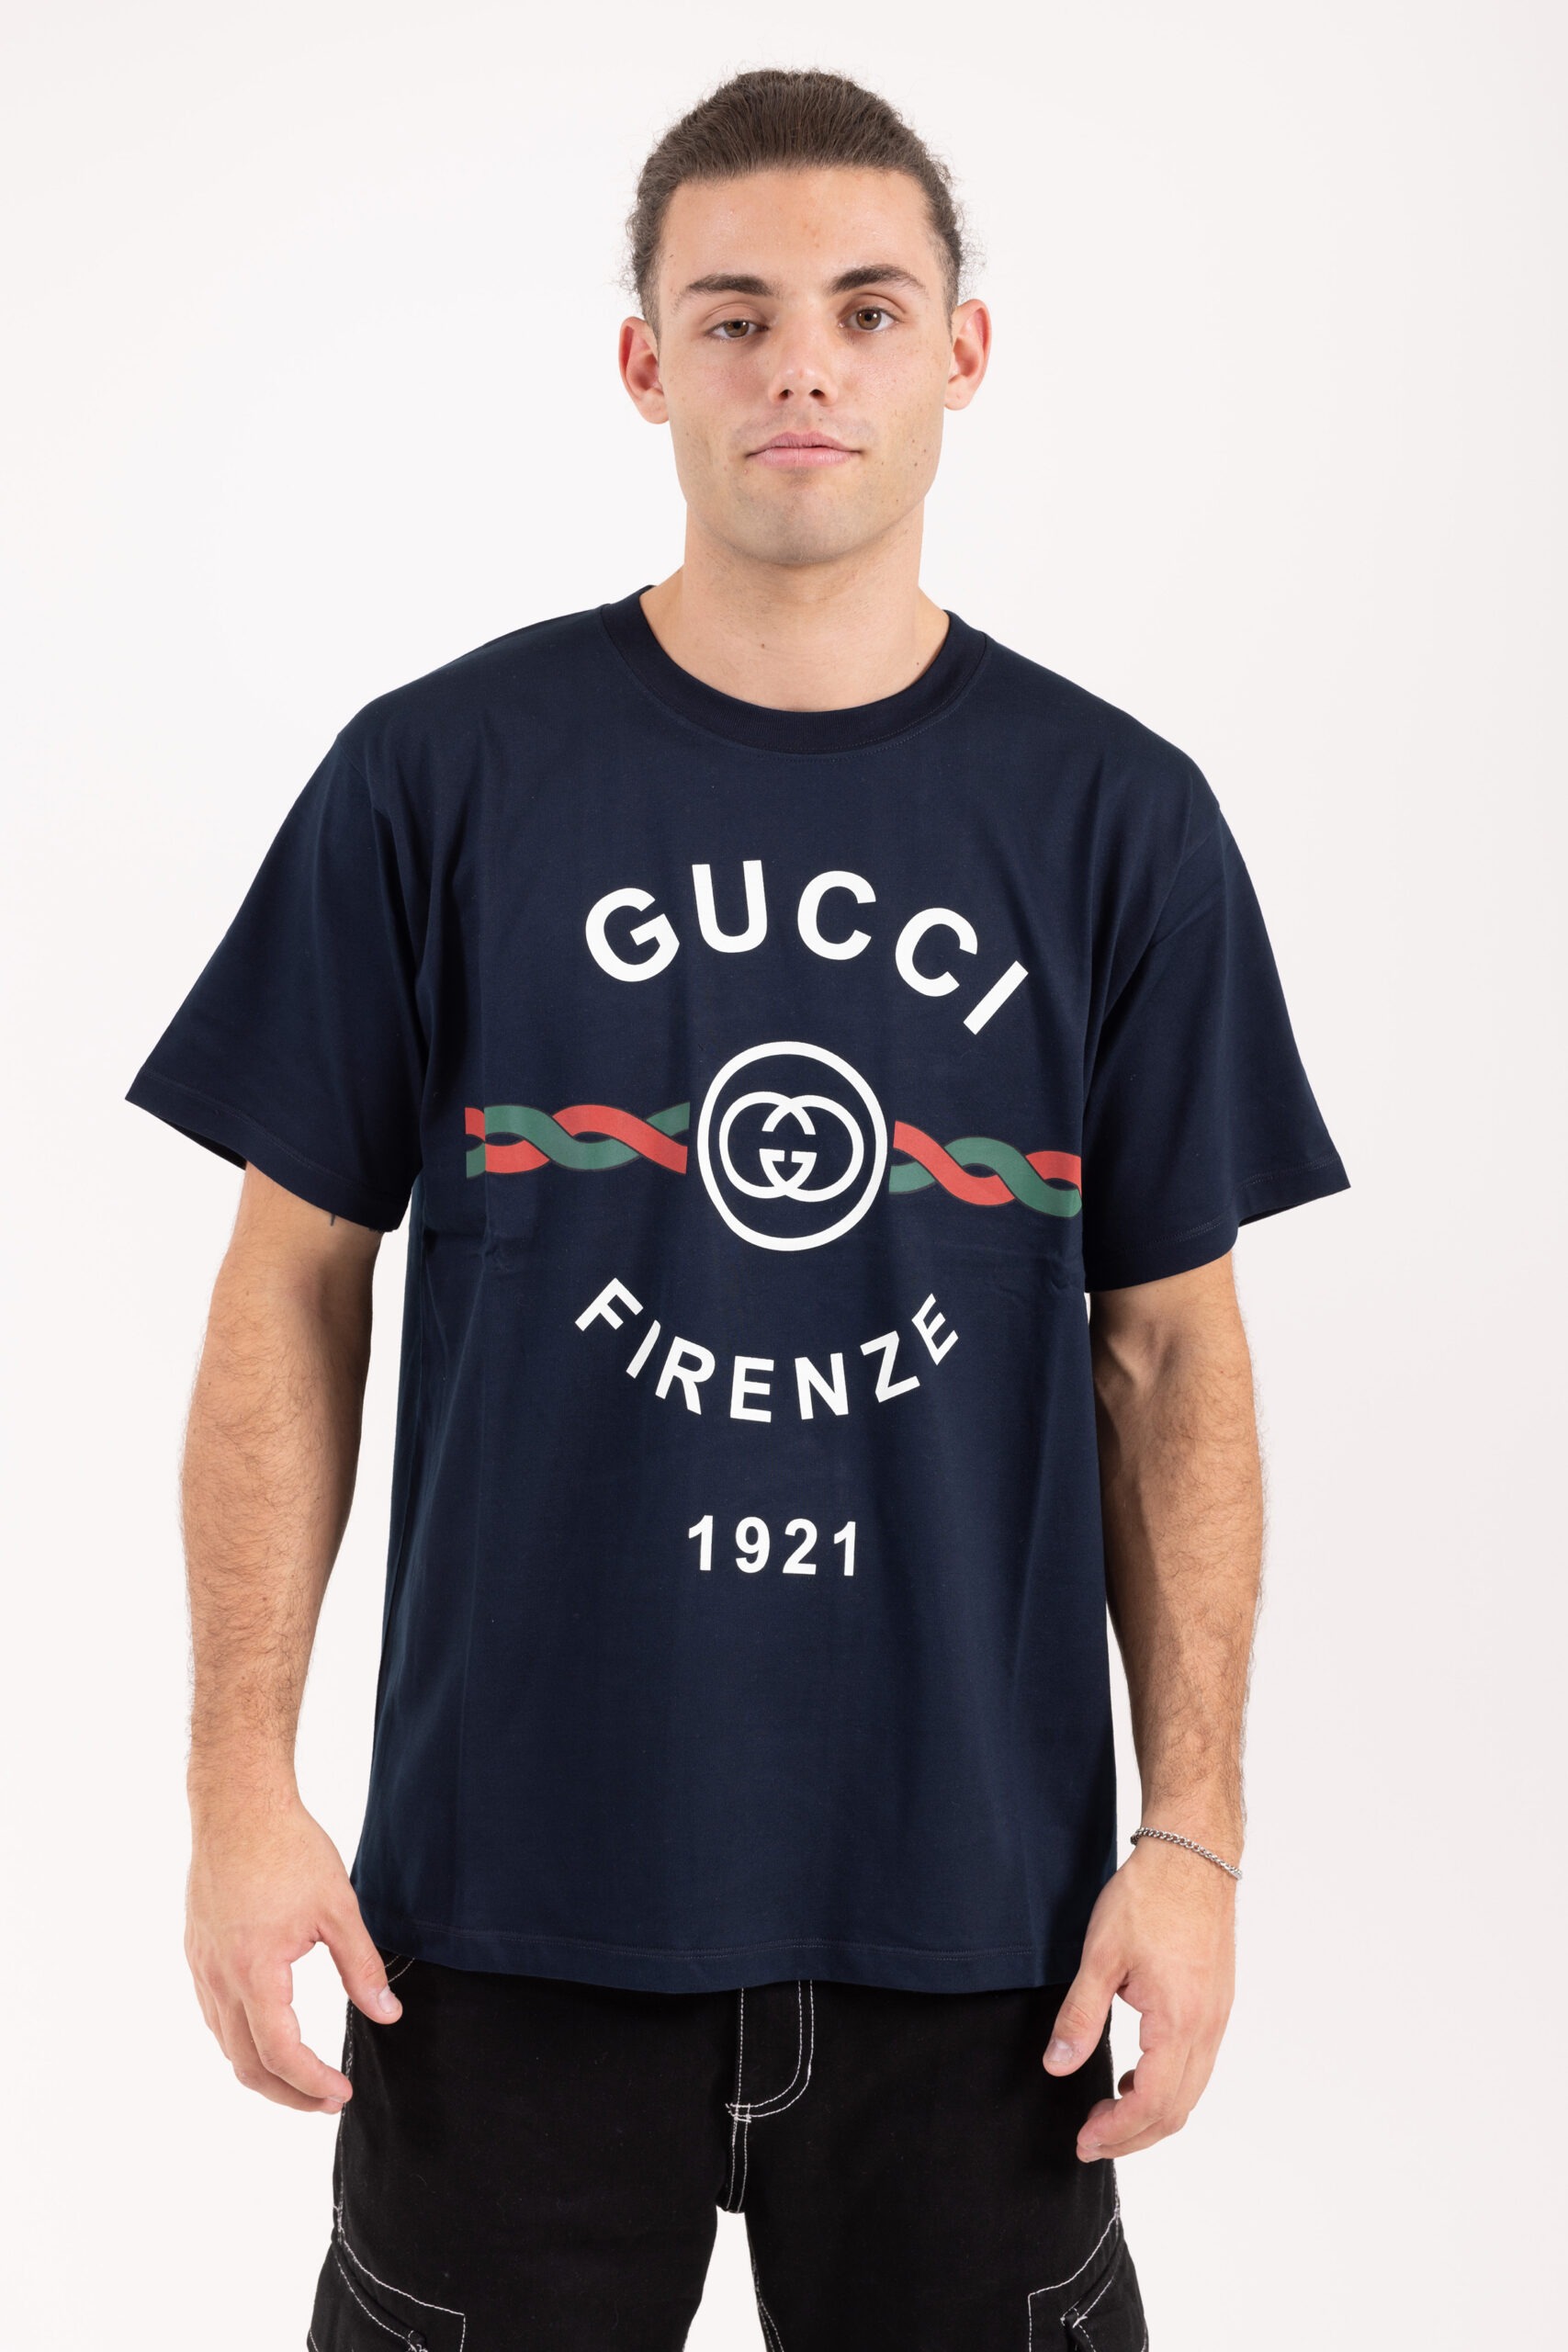 Gucci t shirt con stampa Firenze 1921 in cotone